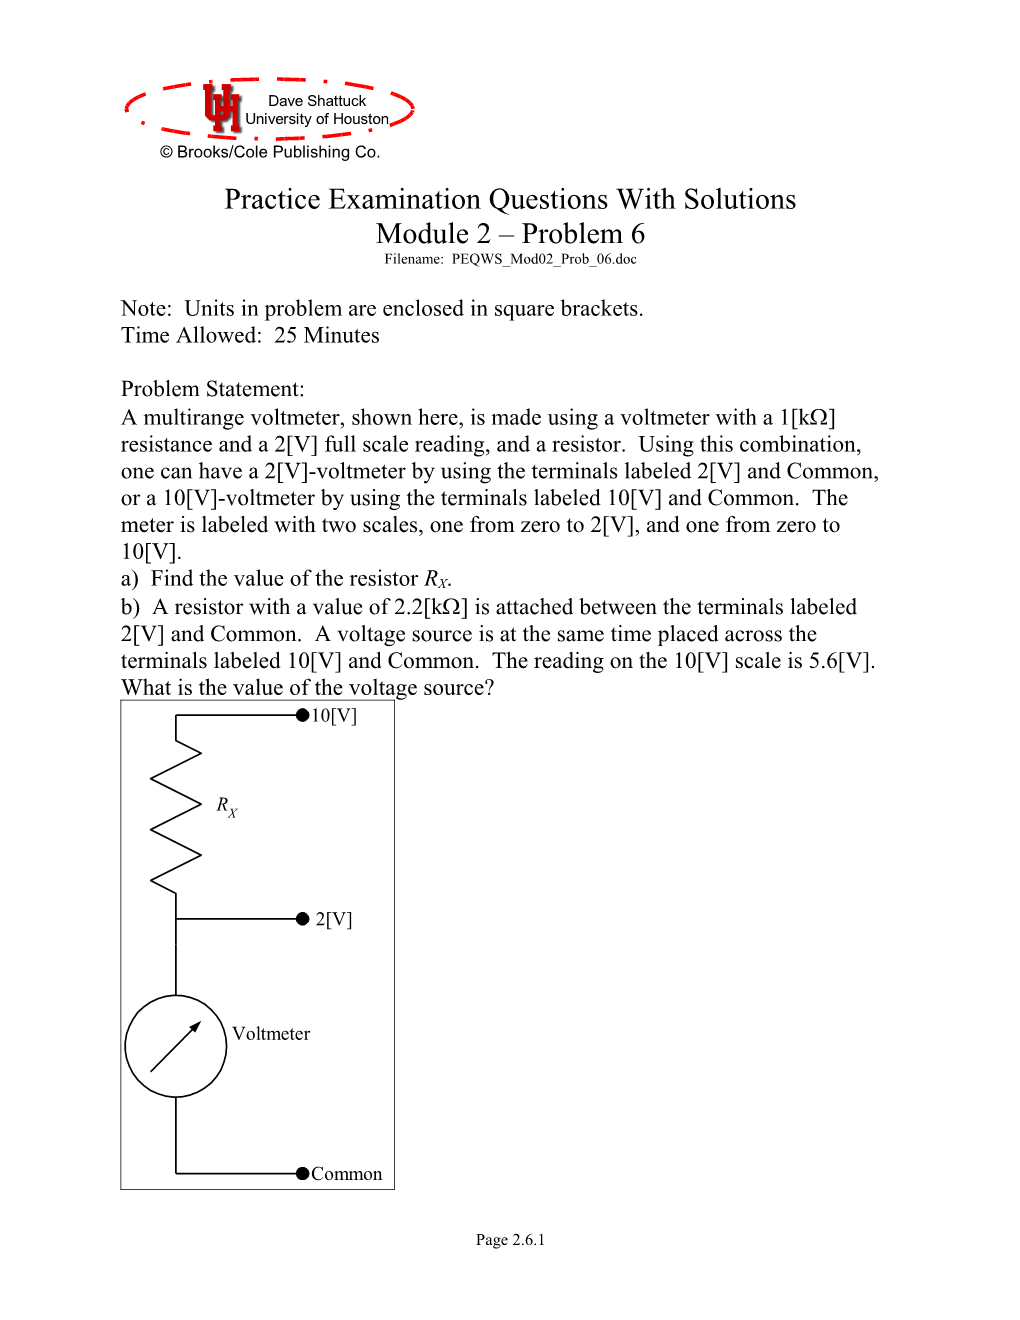 Practice Examination Module 2 Problem 6